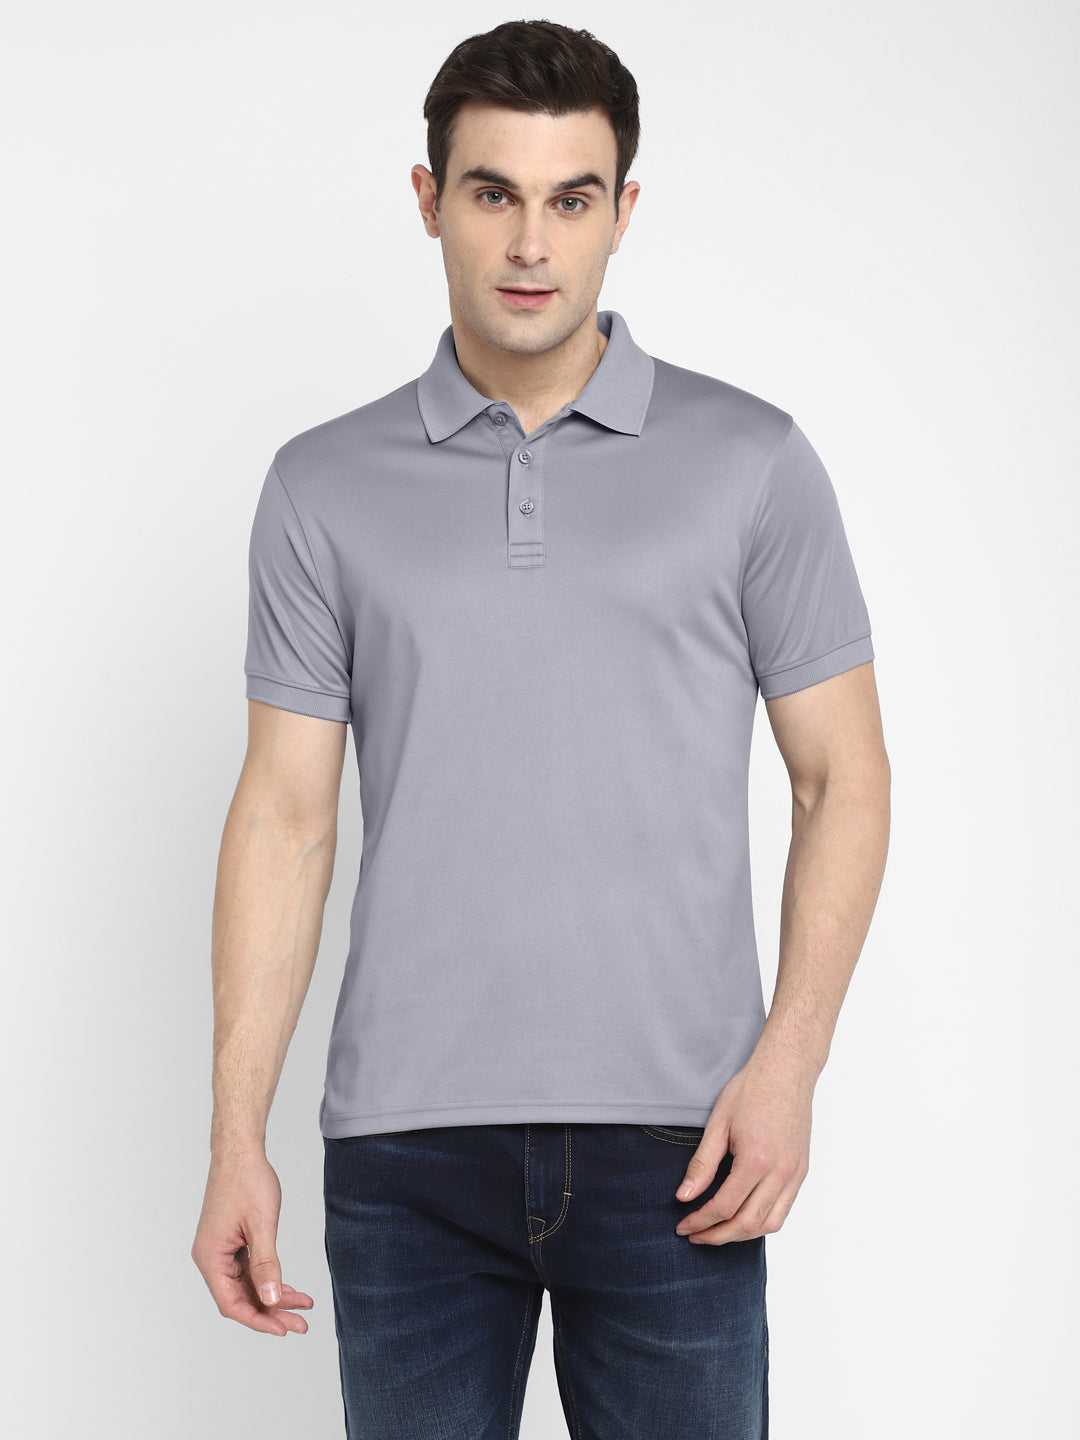 Polo Collar T-Shirt for Men - Steel Grey